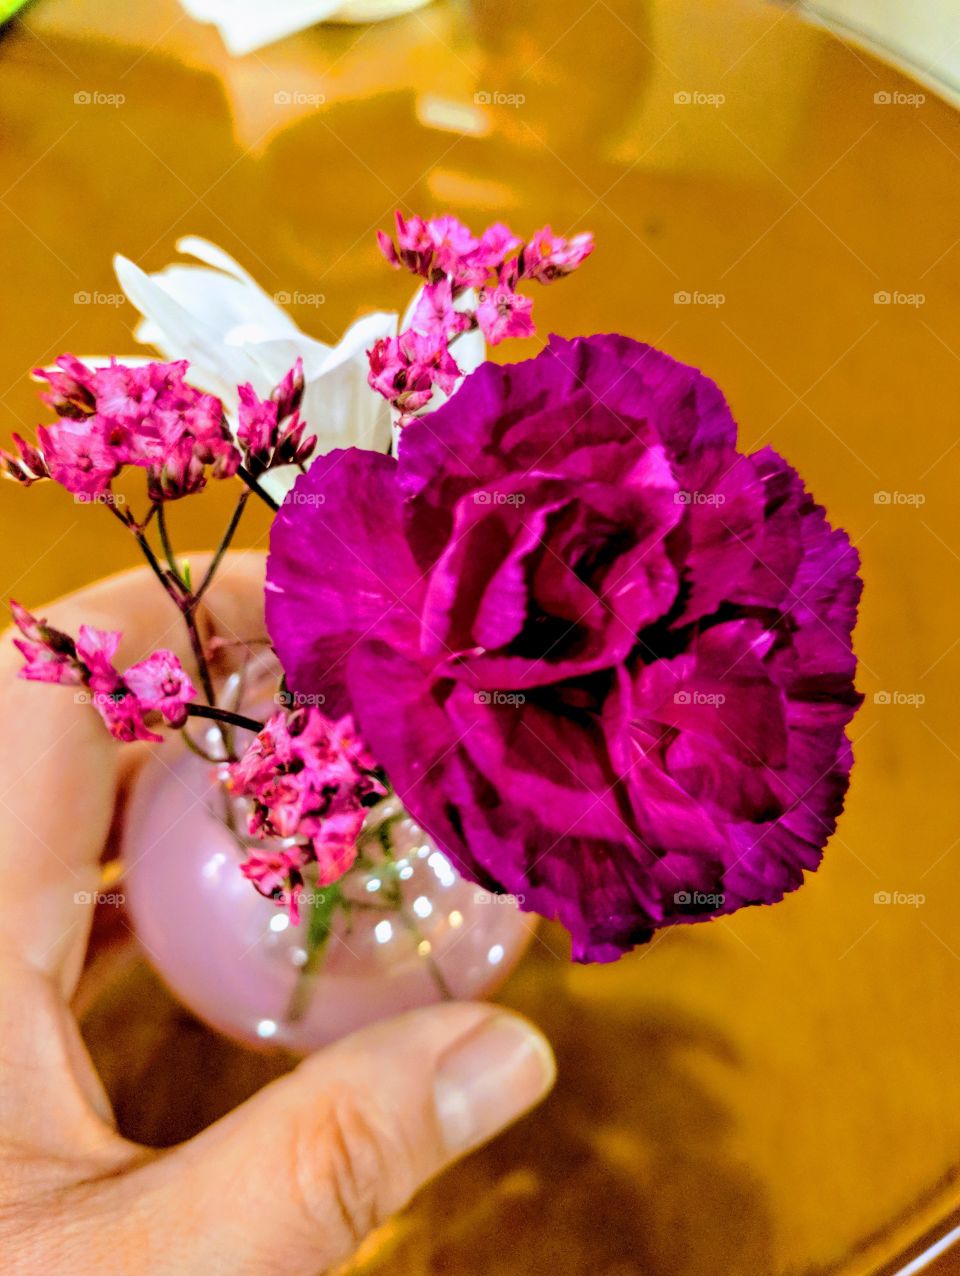 Small Flower Vase In Hand

